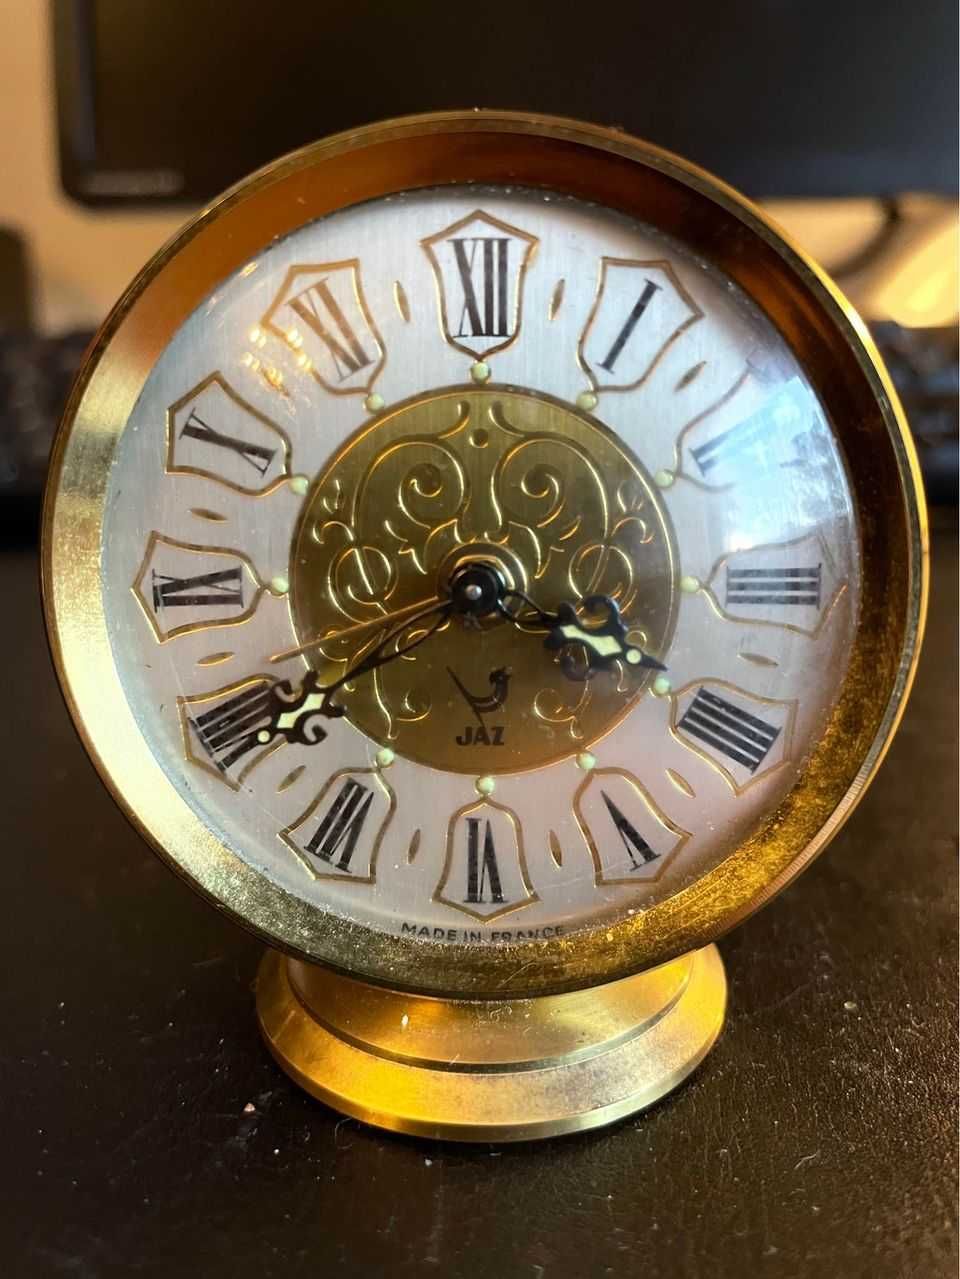 Relógios franceses "Jaz", antigos e vintage (1)